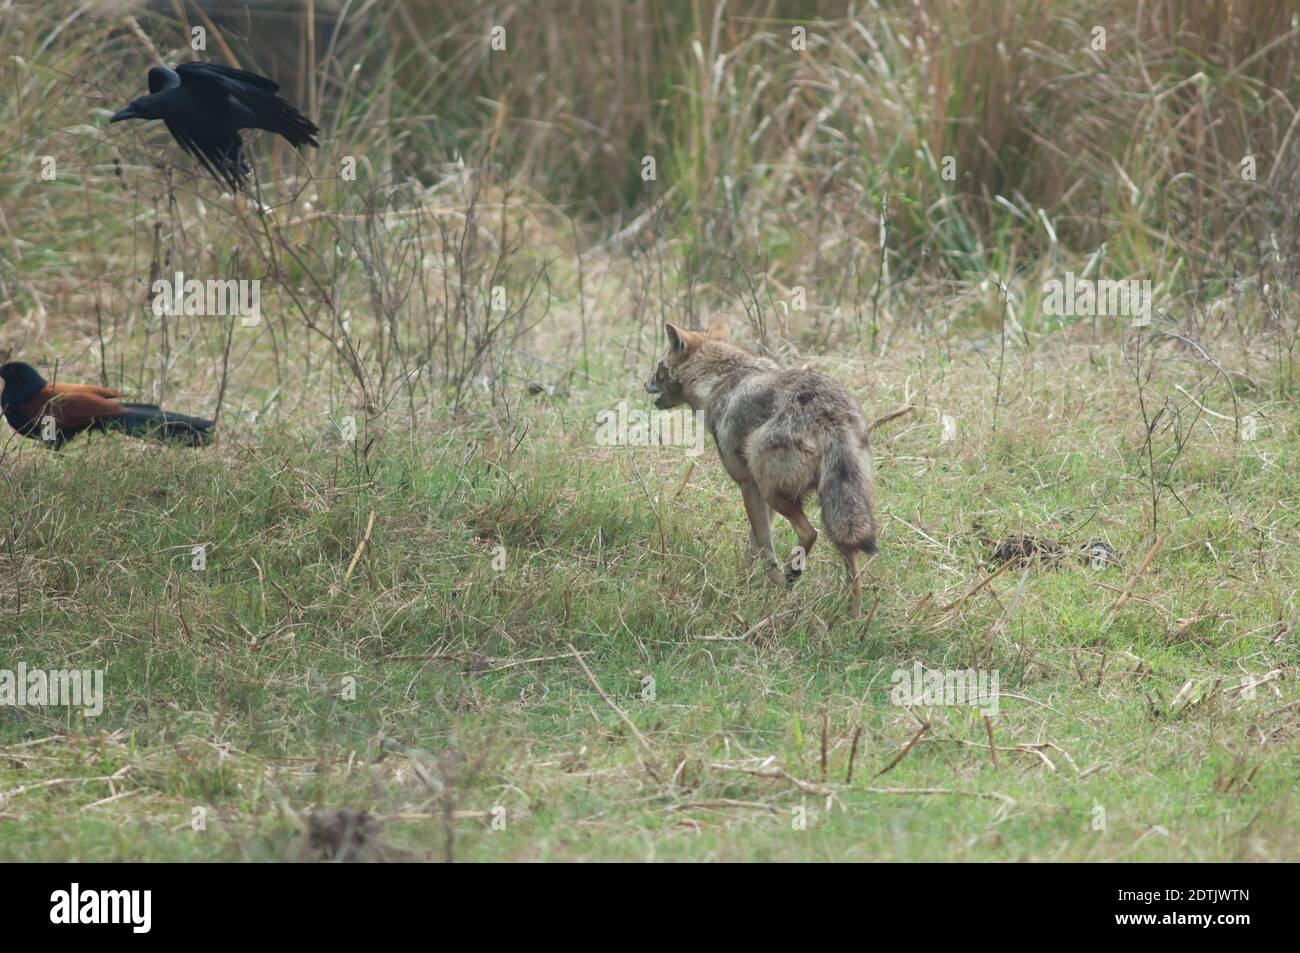 Golden jackal Canis aureus indicus insegue un corvo corvus macrorhynchos fatturato a grandi dimensioni. Parco Nazionale Keoladeo Ghana. Bharatpur. Rajasthan. India. Foto Stock